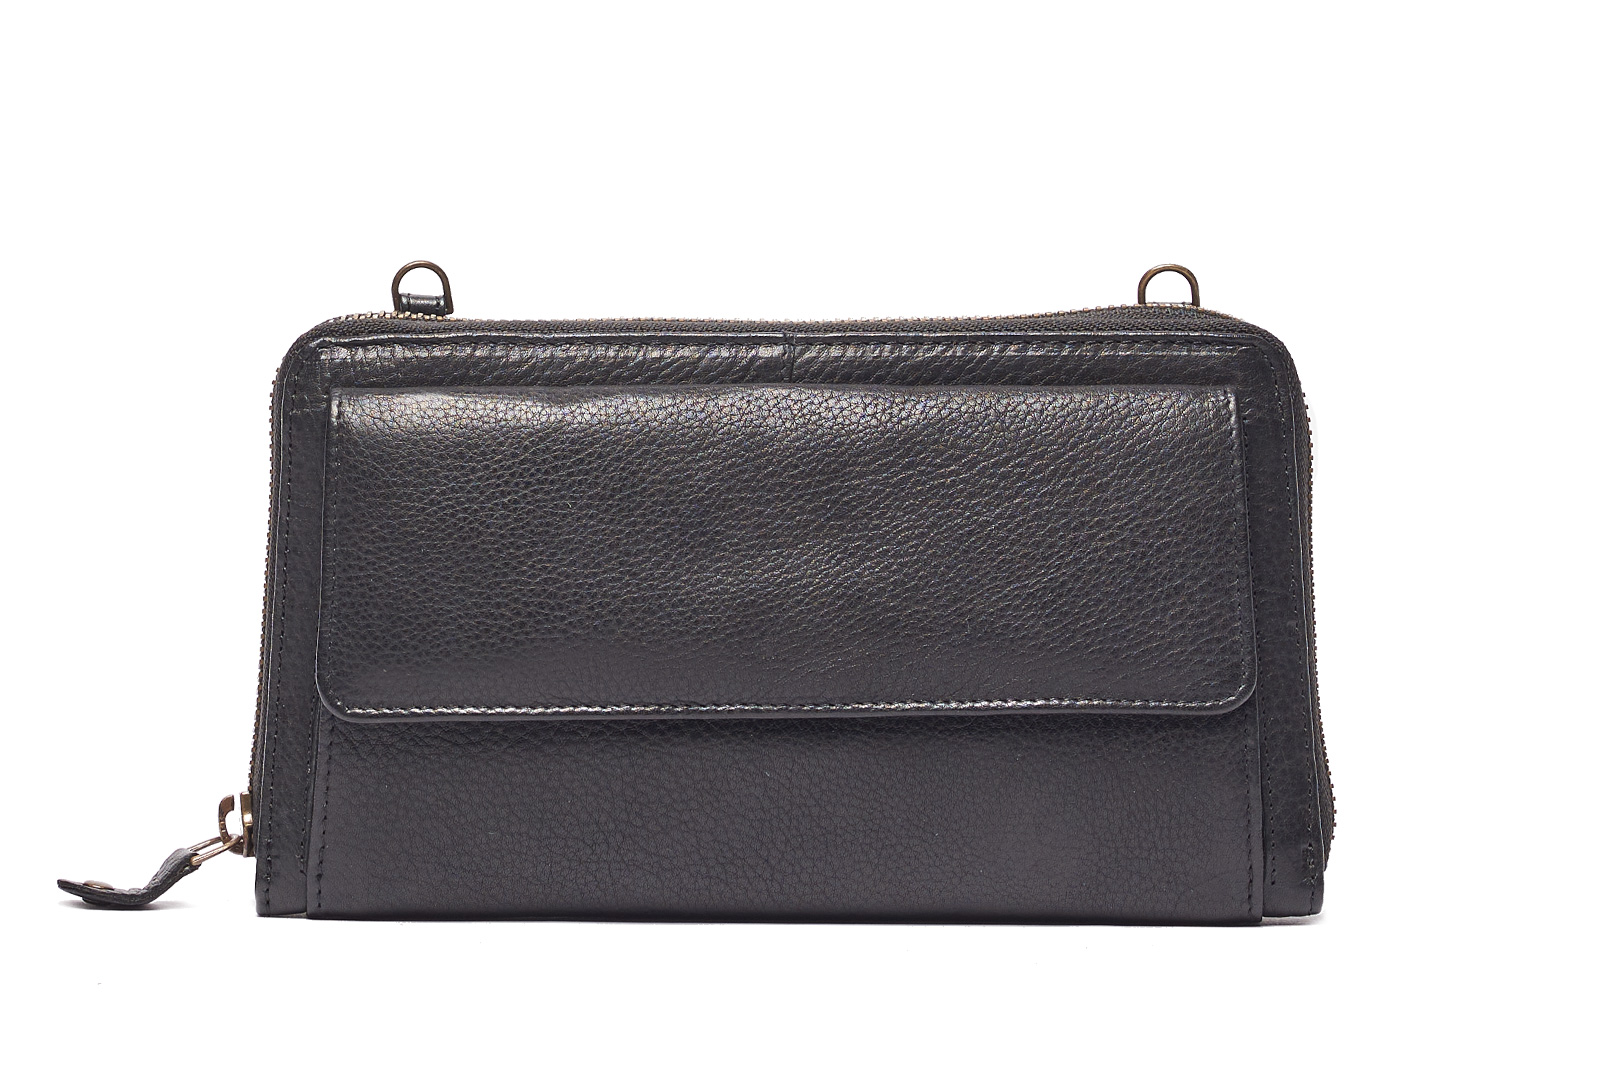 RH-455 Susan - Black - Oran Leather